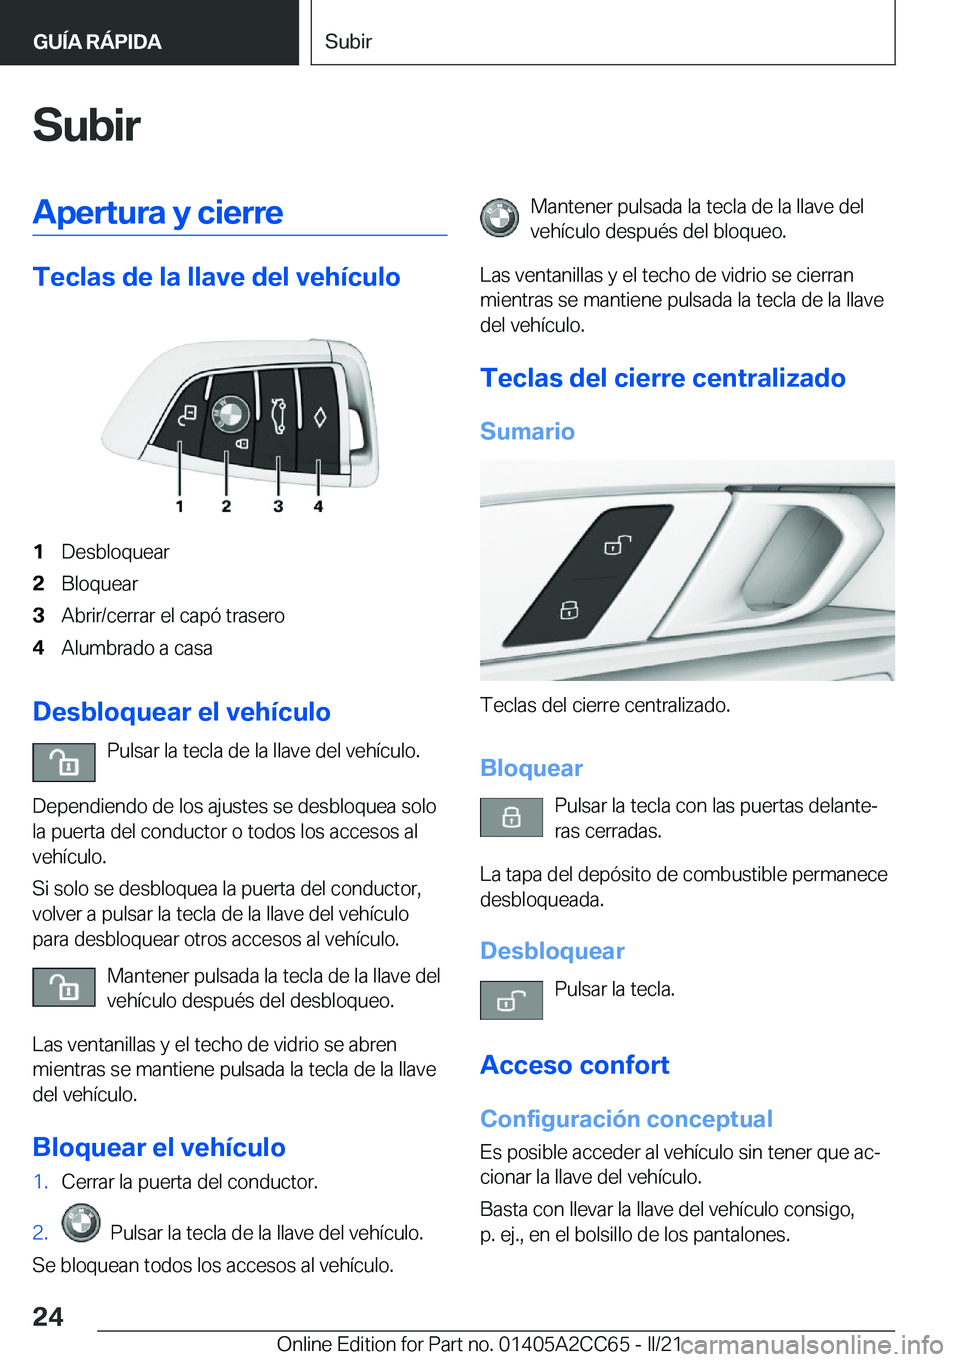 BMW 8 SERIES GRAN COUPE 2022  Manuales de Empleo (in Spanish) �S�u�b�i�r�A�p�e�r�t�u�r�a��y��c�i�e�r�r�e
�T�e�c�l�a�s��d�e��l�a��l�l�a�v�e��d�e�l��v�e�h�